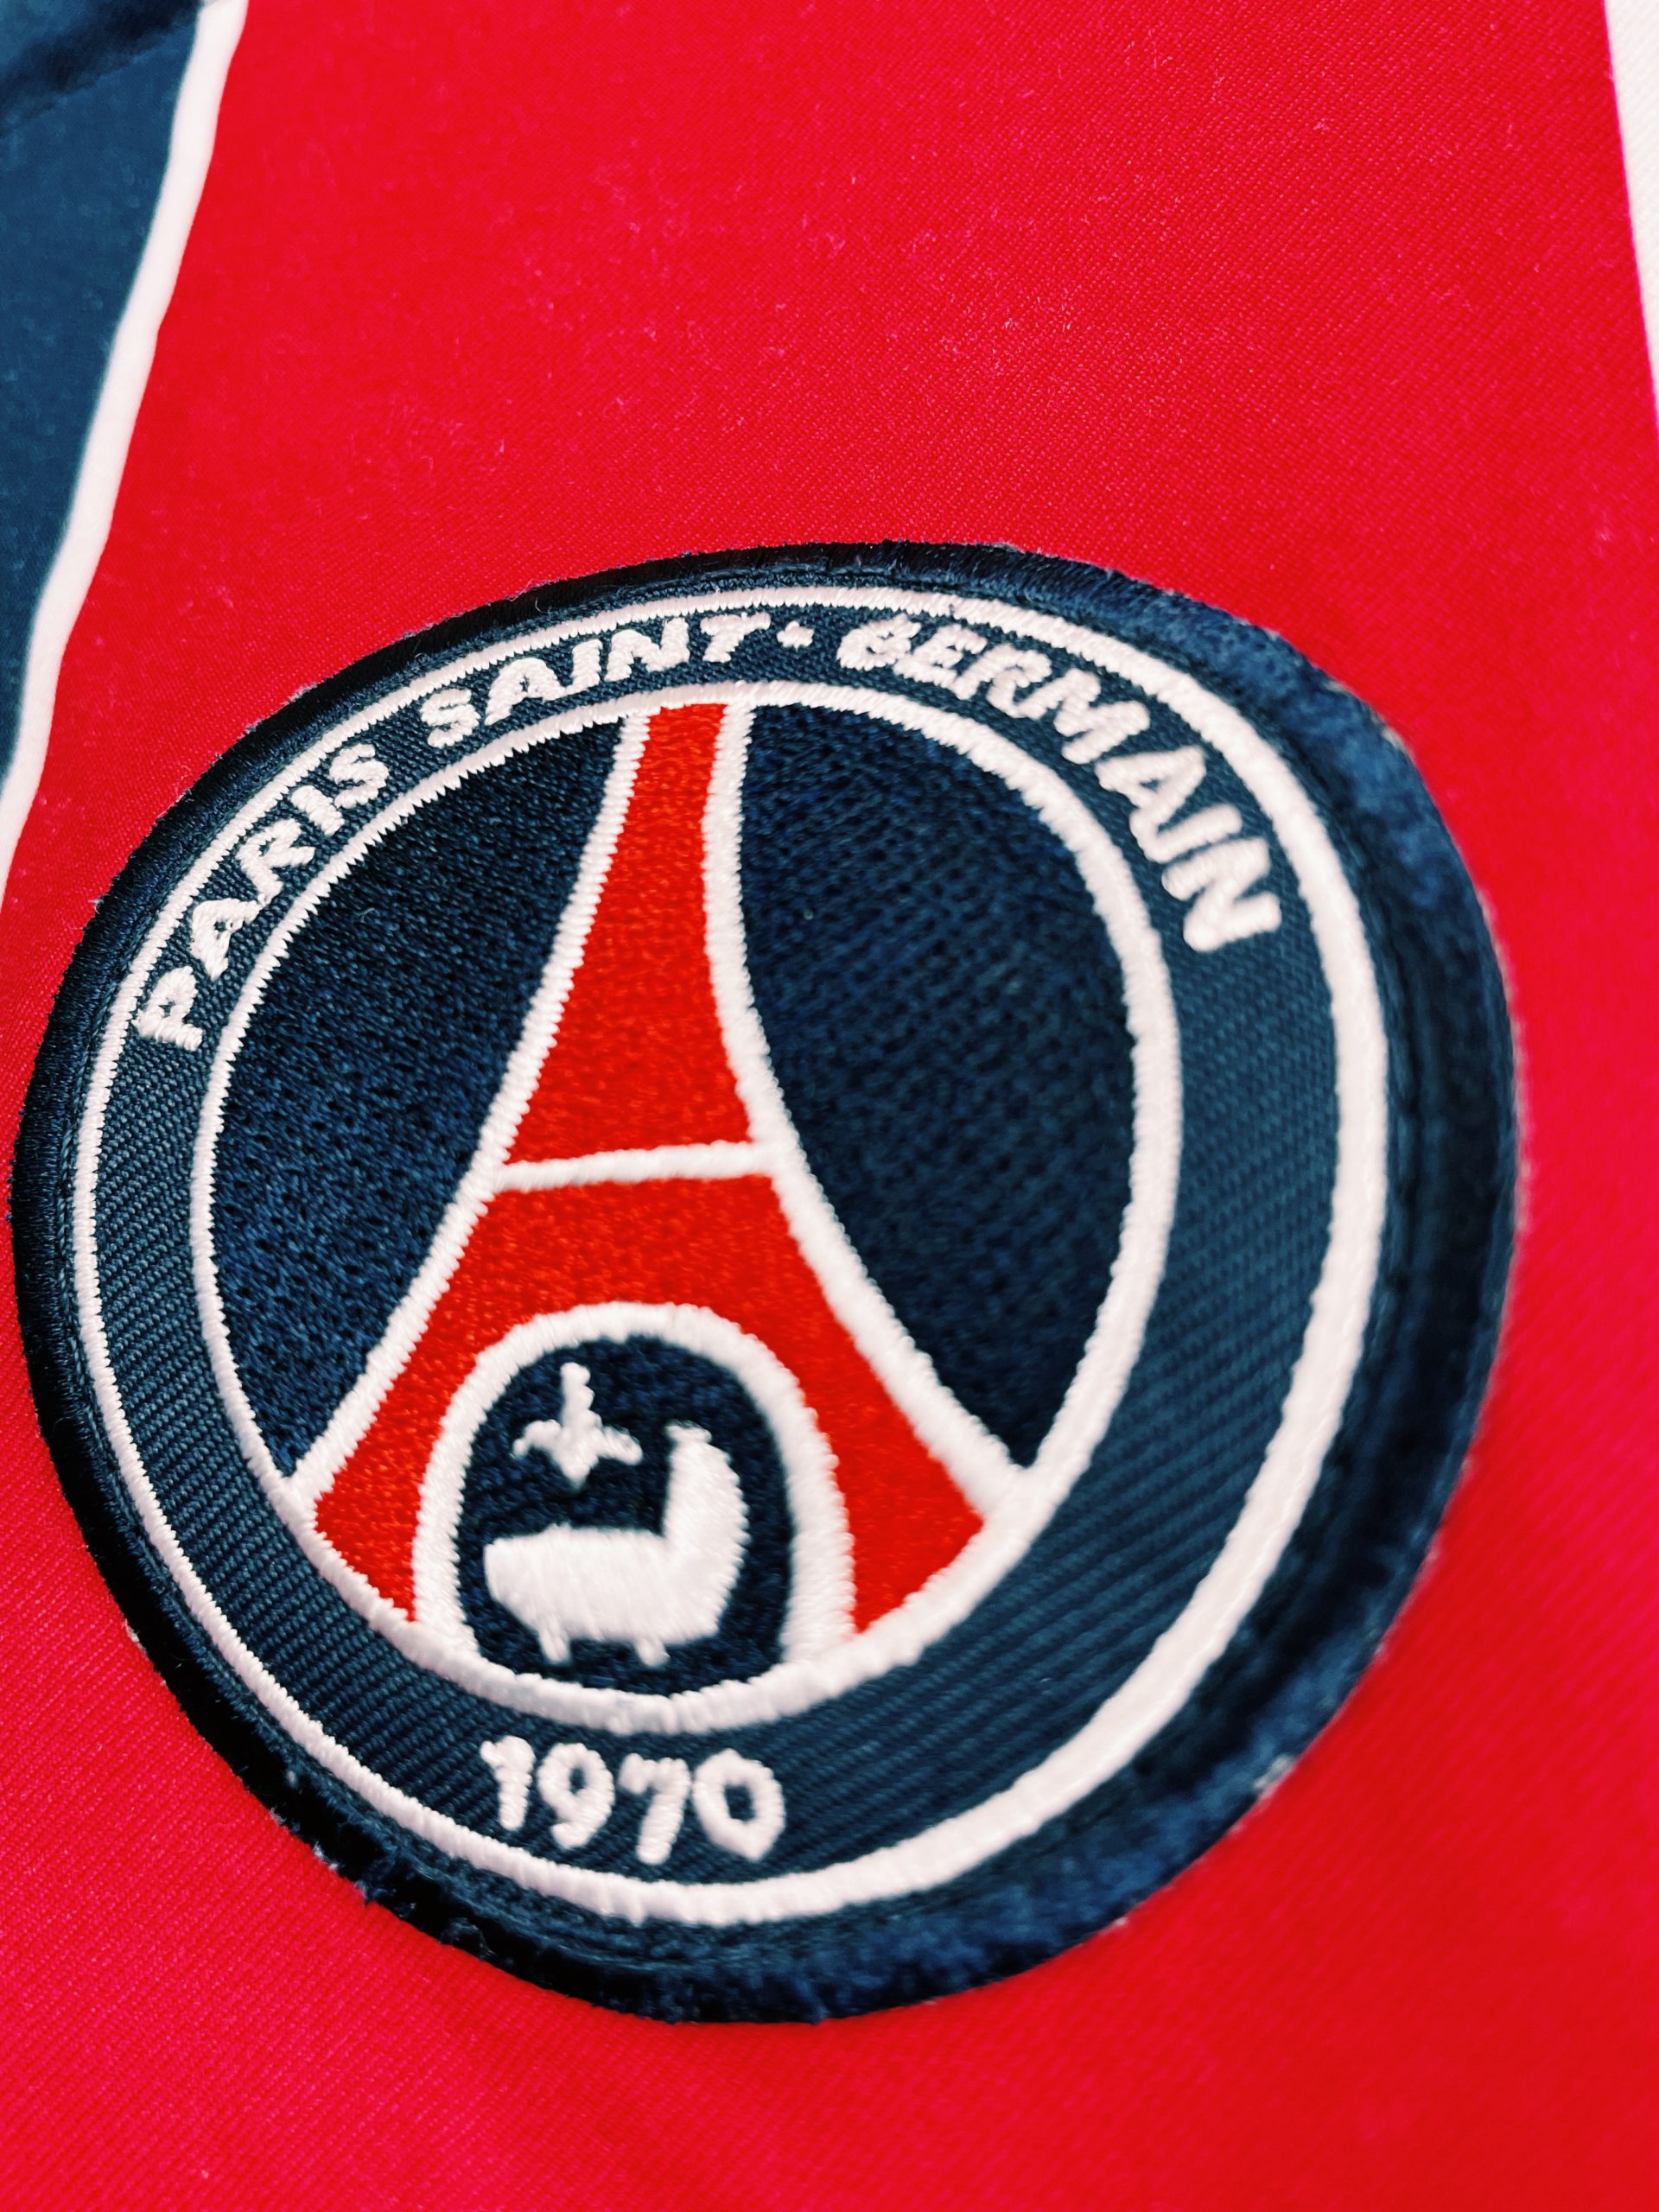 Maillot Nike Football PSG Paris Saint Germain Home Vintage ROTHEN